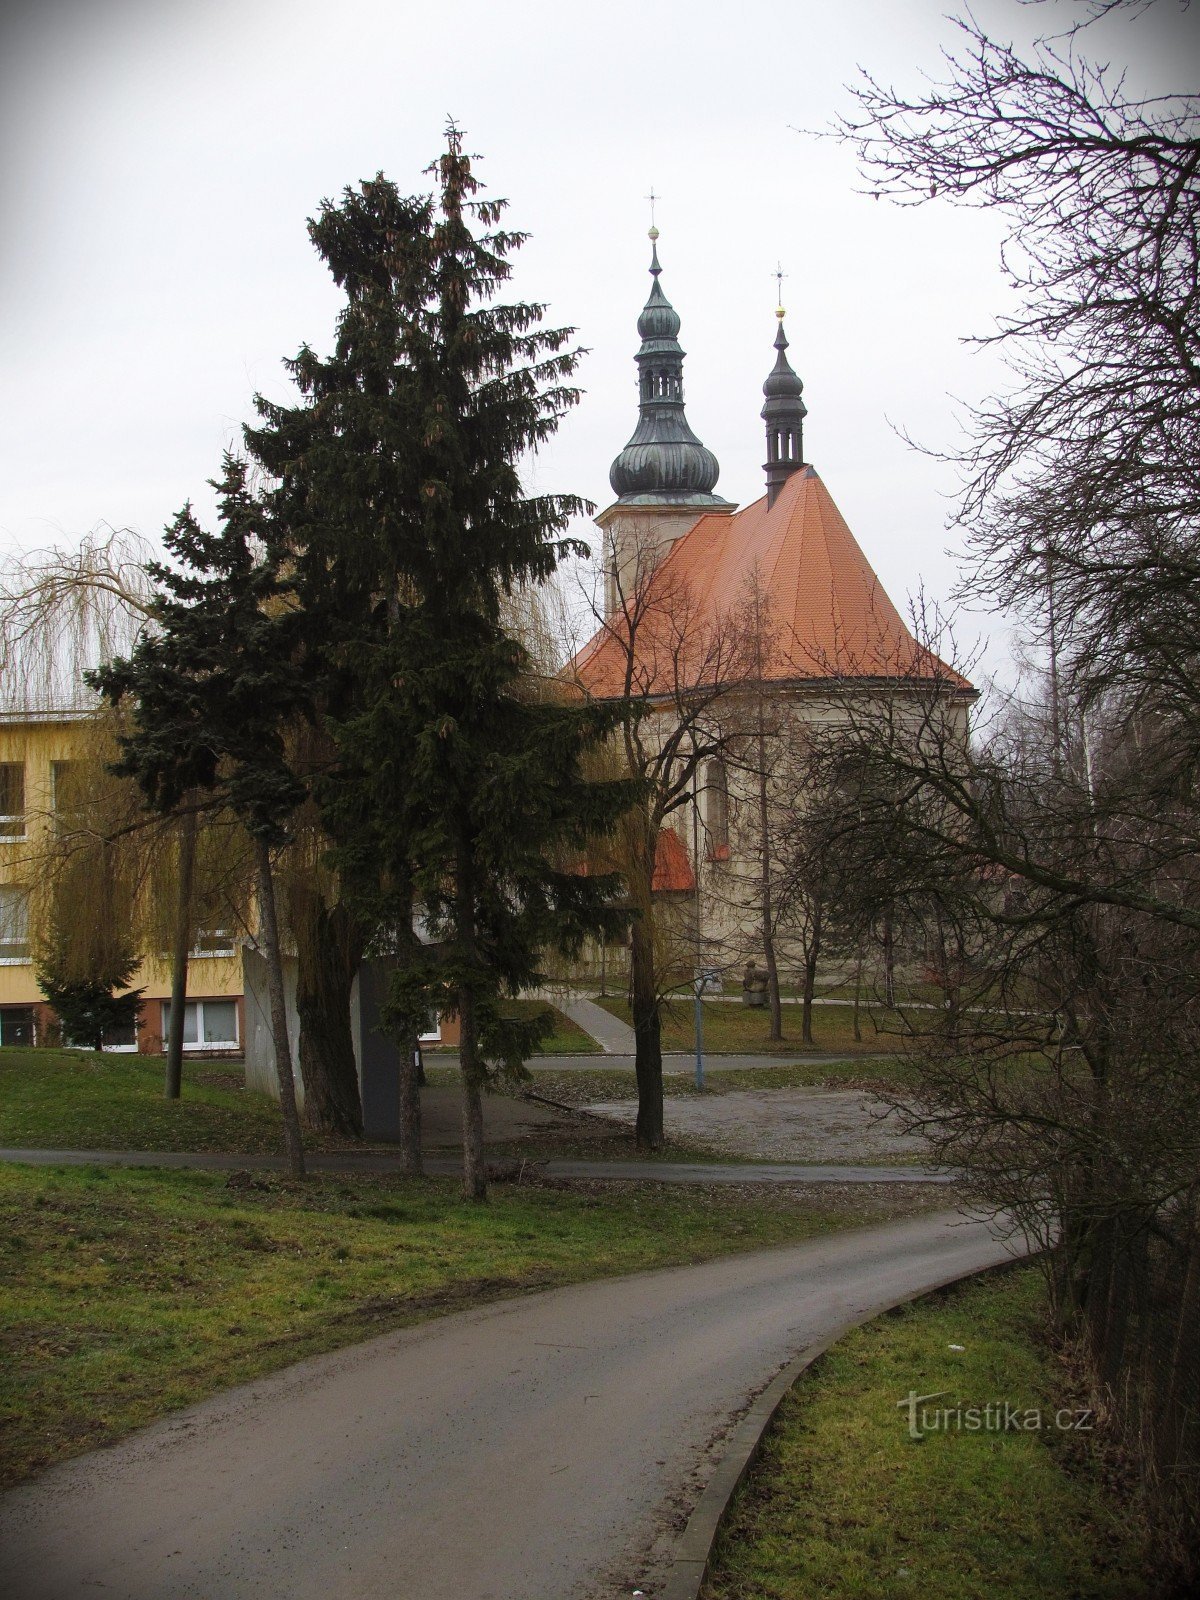 Chřiby - Church of the Assumption of Mary in Střílky